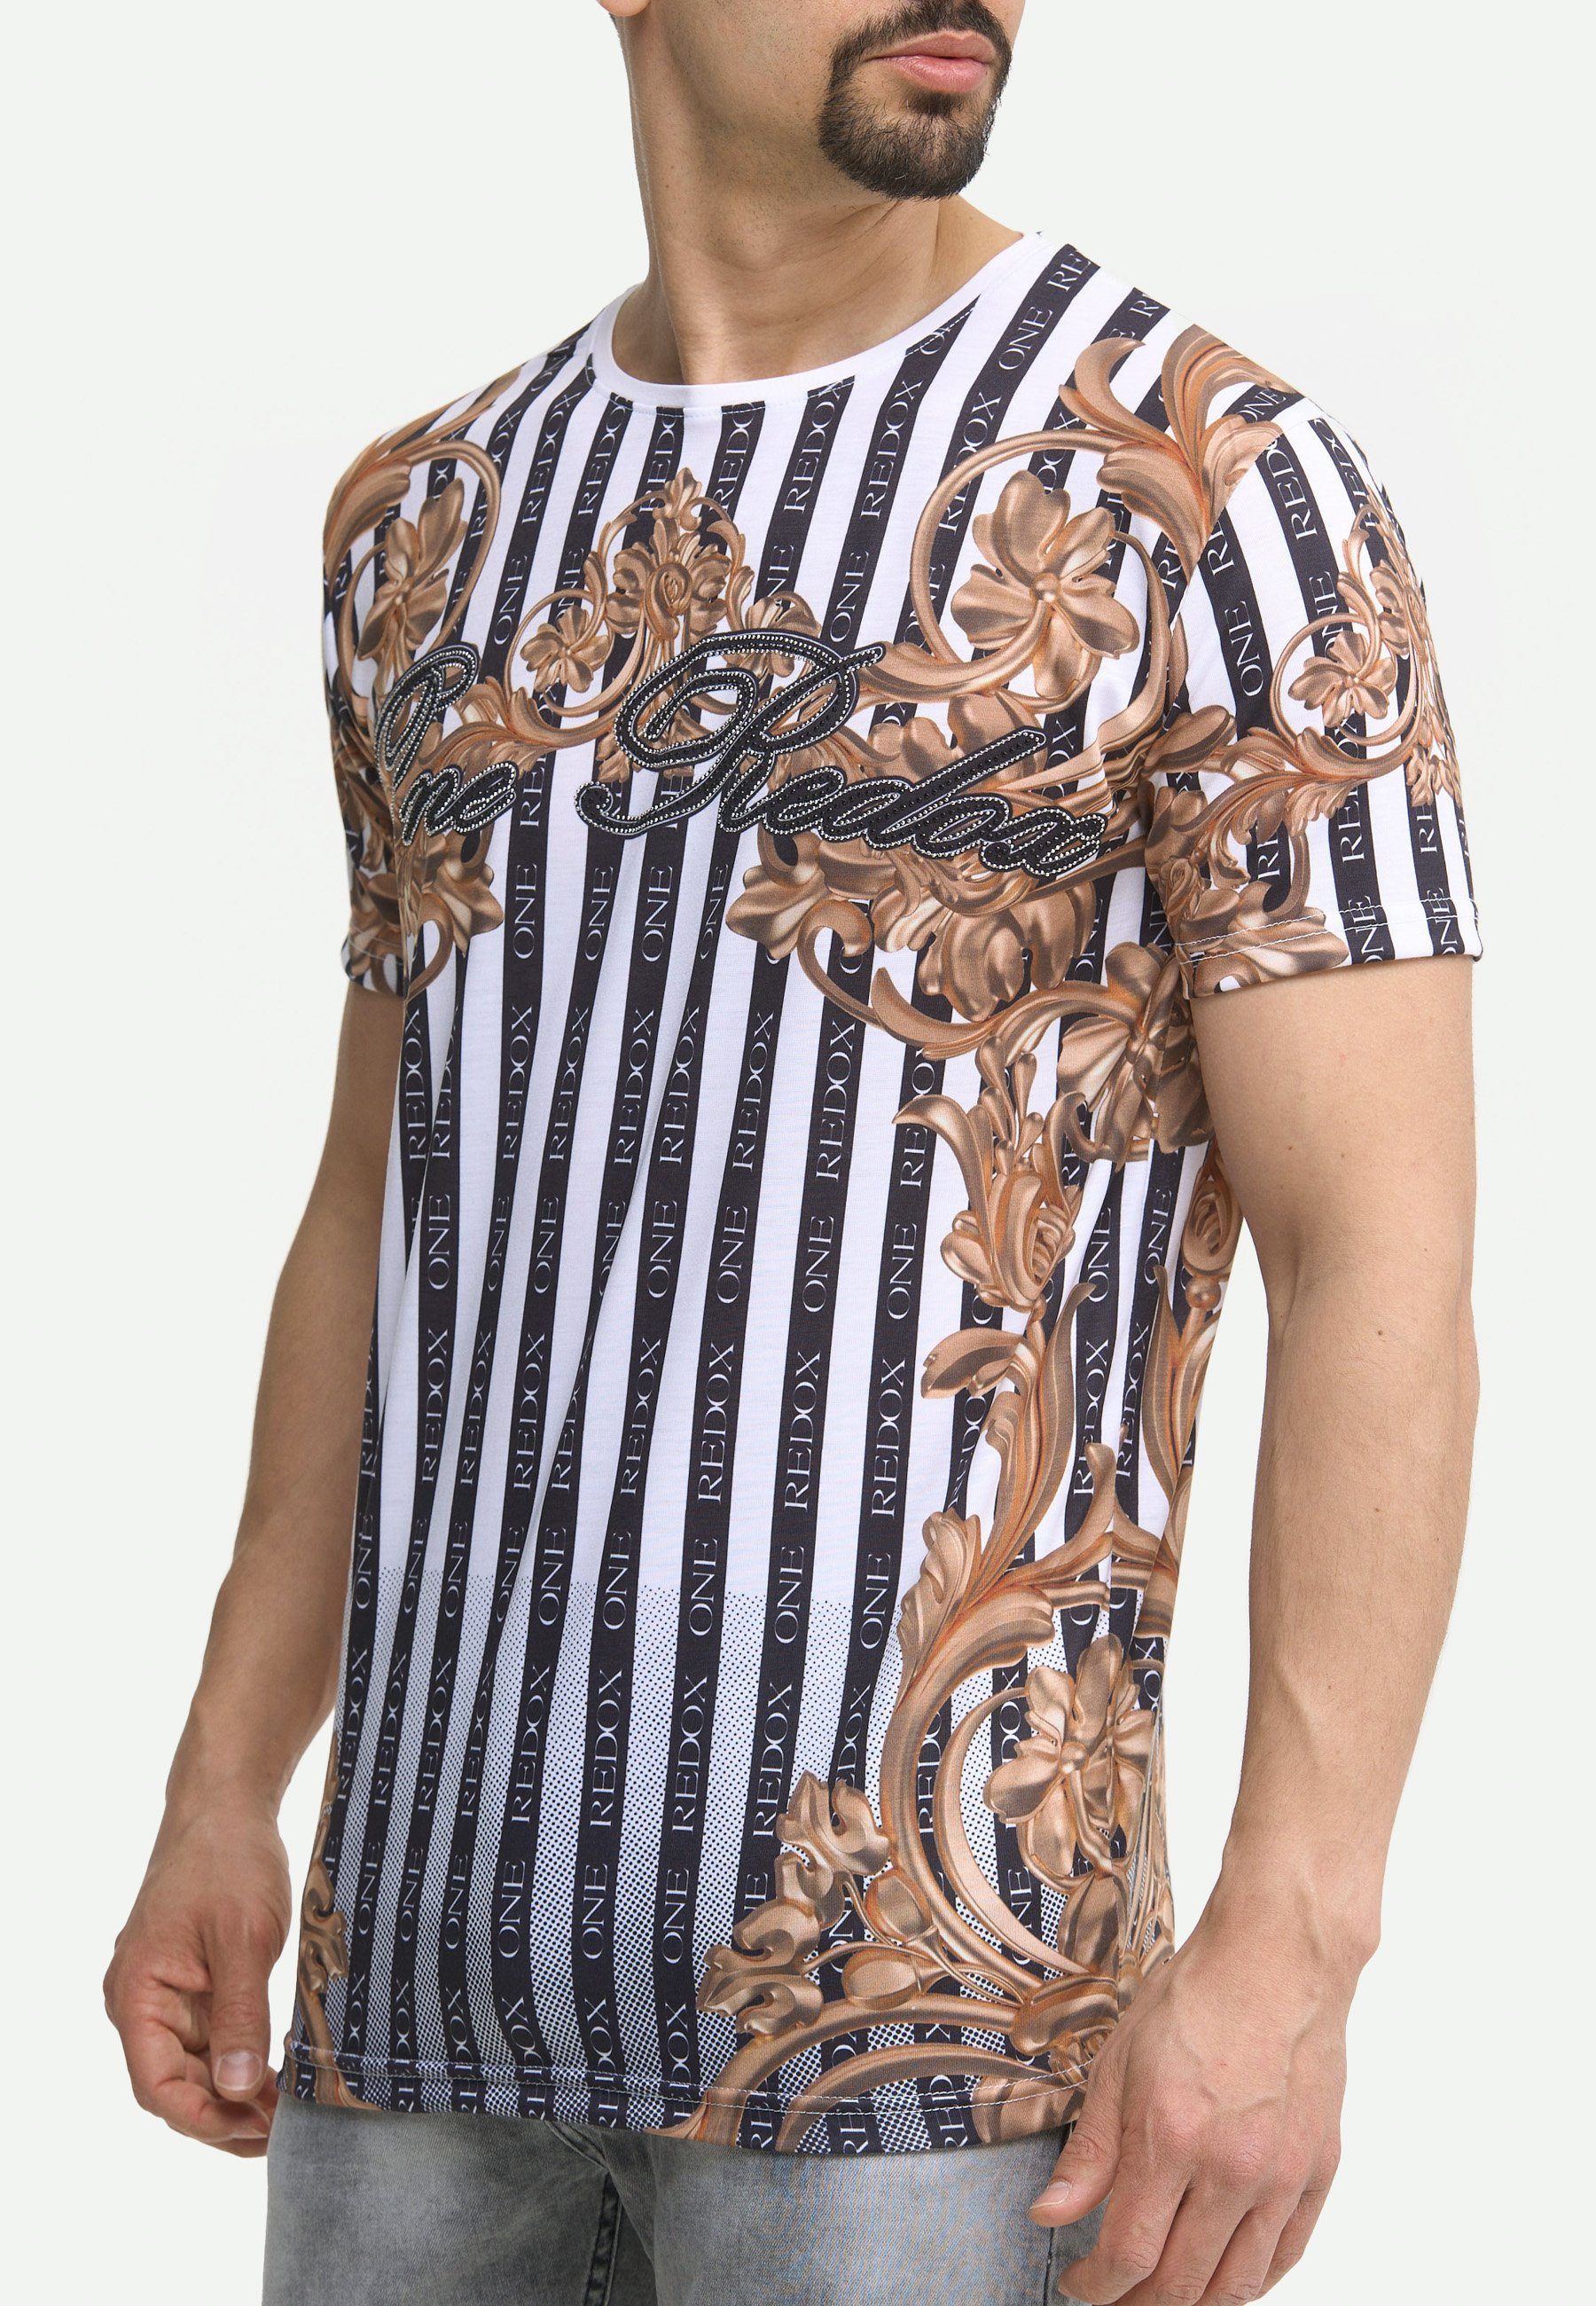 Designer Printshirt (Longsleeve Code47 Shortsleev T-Shirt Shirt, Code47 1-tlg) Tee Oberteil Weiß Polo T-Shirt Herren